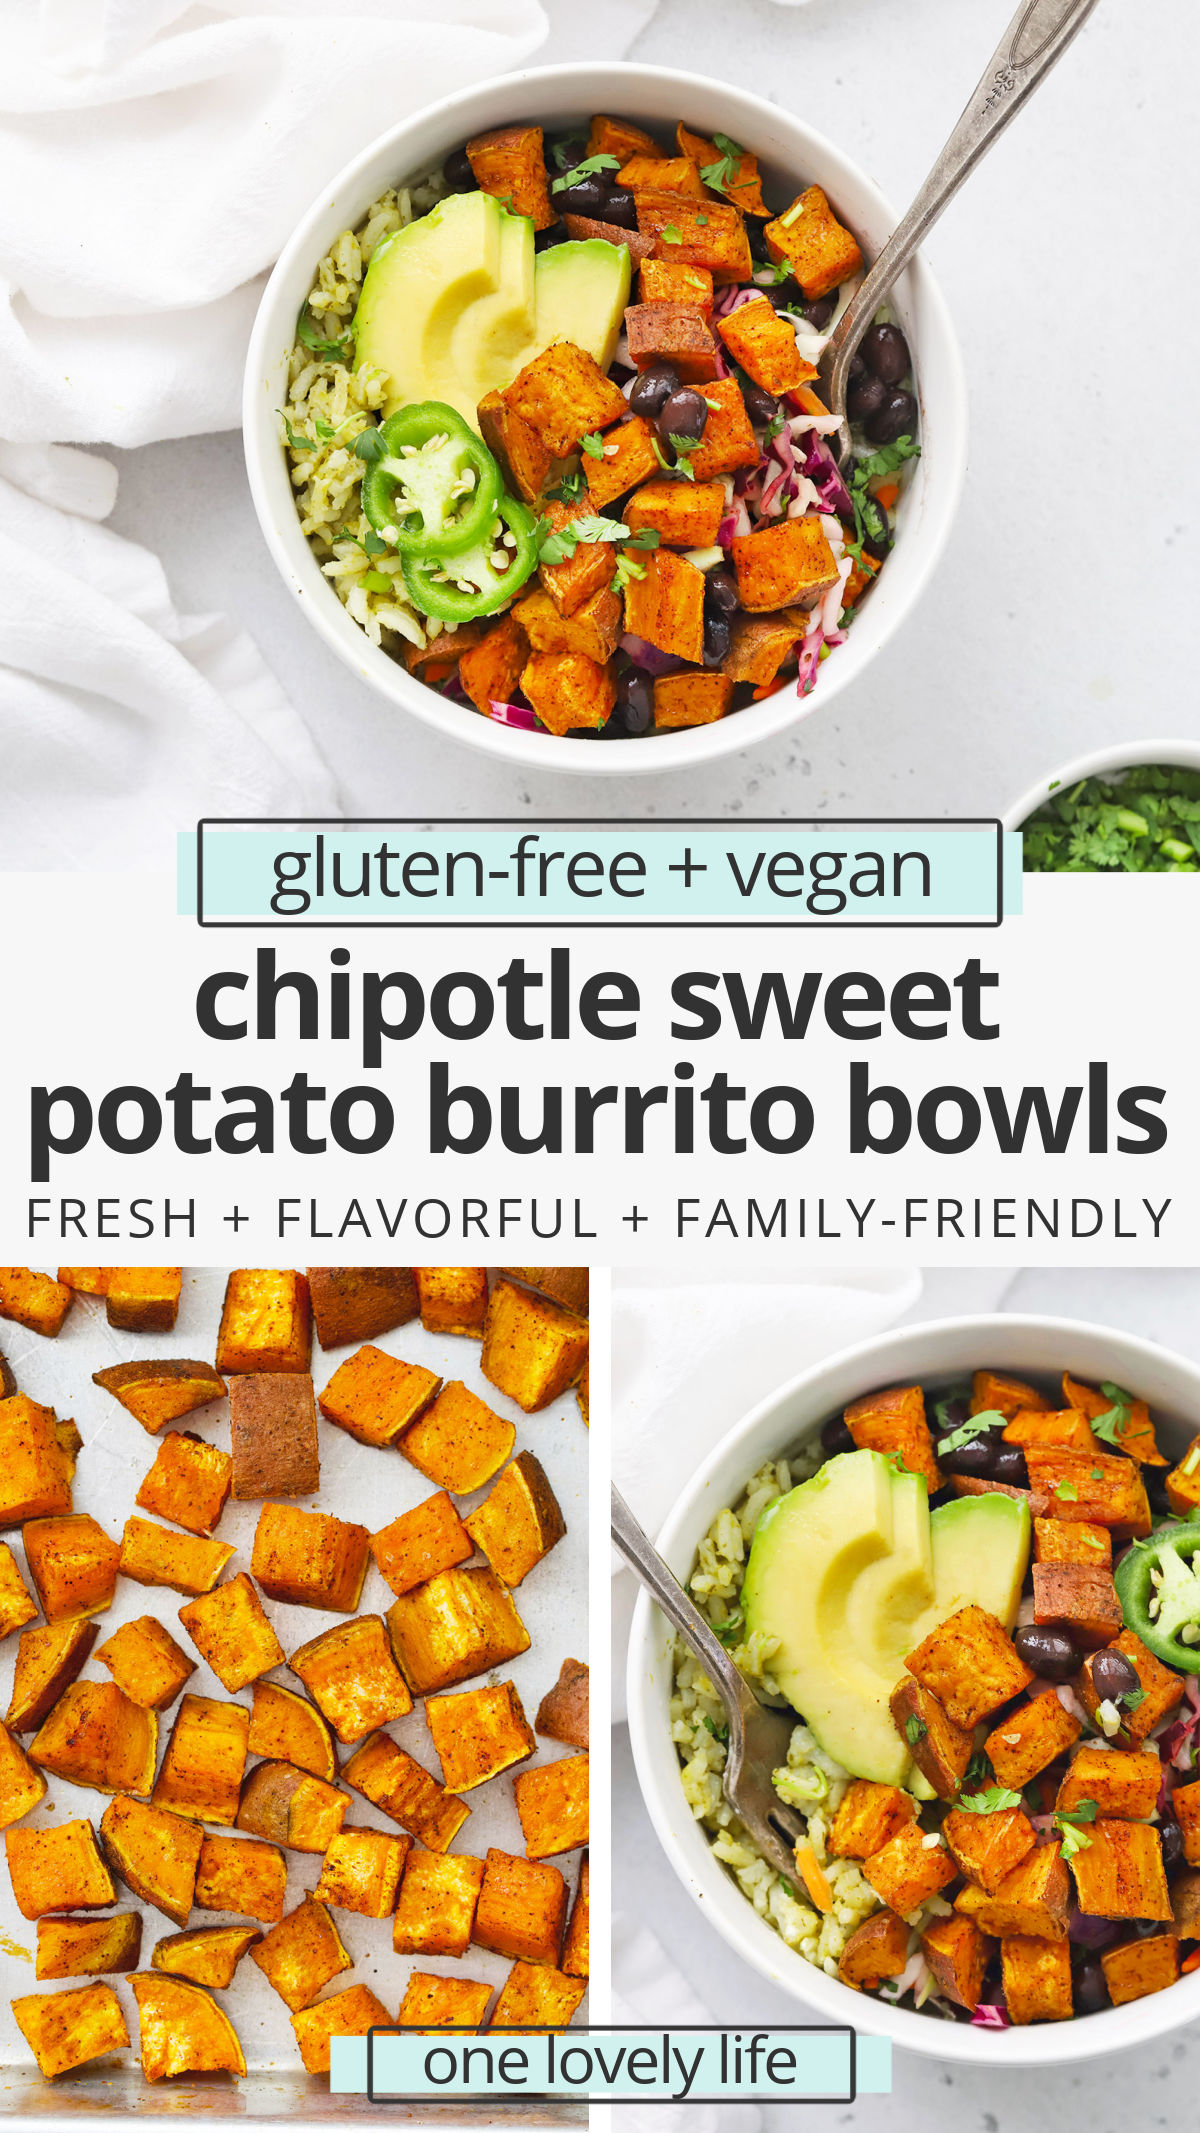 Chipotle Sweet Potato Burrito Bowls - Colorful sweet potato black bean burrito bowls loaded with seasoned roasted chipotle sweet potatoes, black beans, veggies, rice, and more. One of our favorite vegan burrito bowl recipes! (Gluten-Free, Vegan) // burrito bowl // roasted sweet potatoes // vegan burrito bowl // vegan dinner // healthy dinner #glutenfree #vegan #texmex #burritobowl #burrito